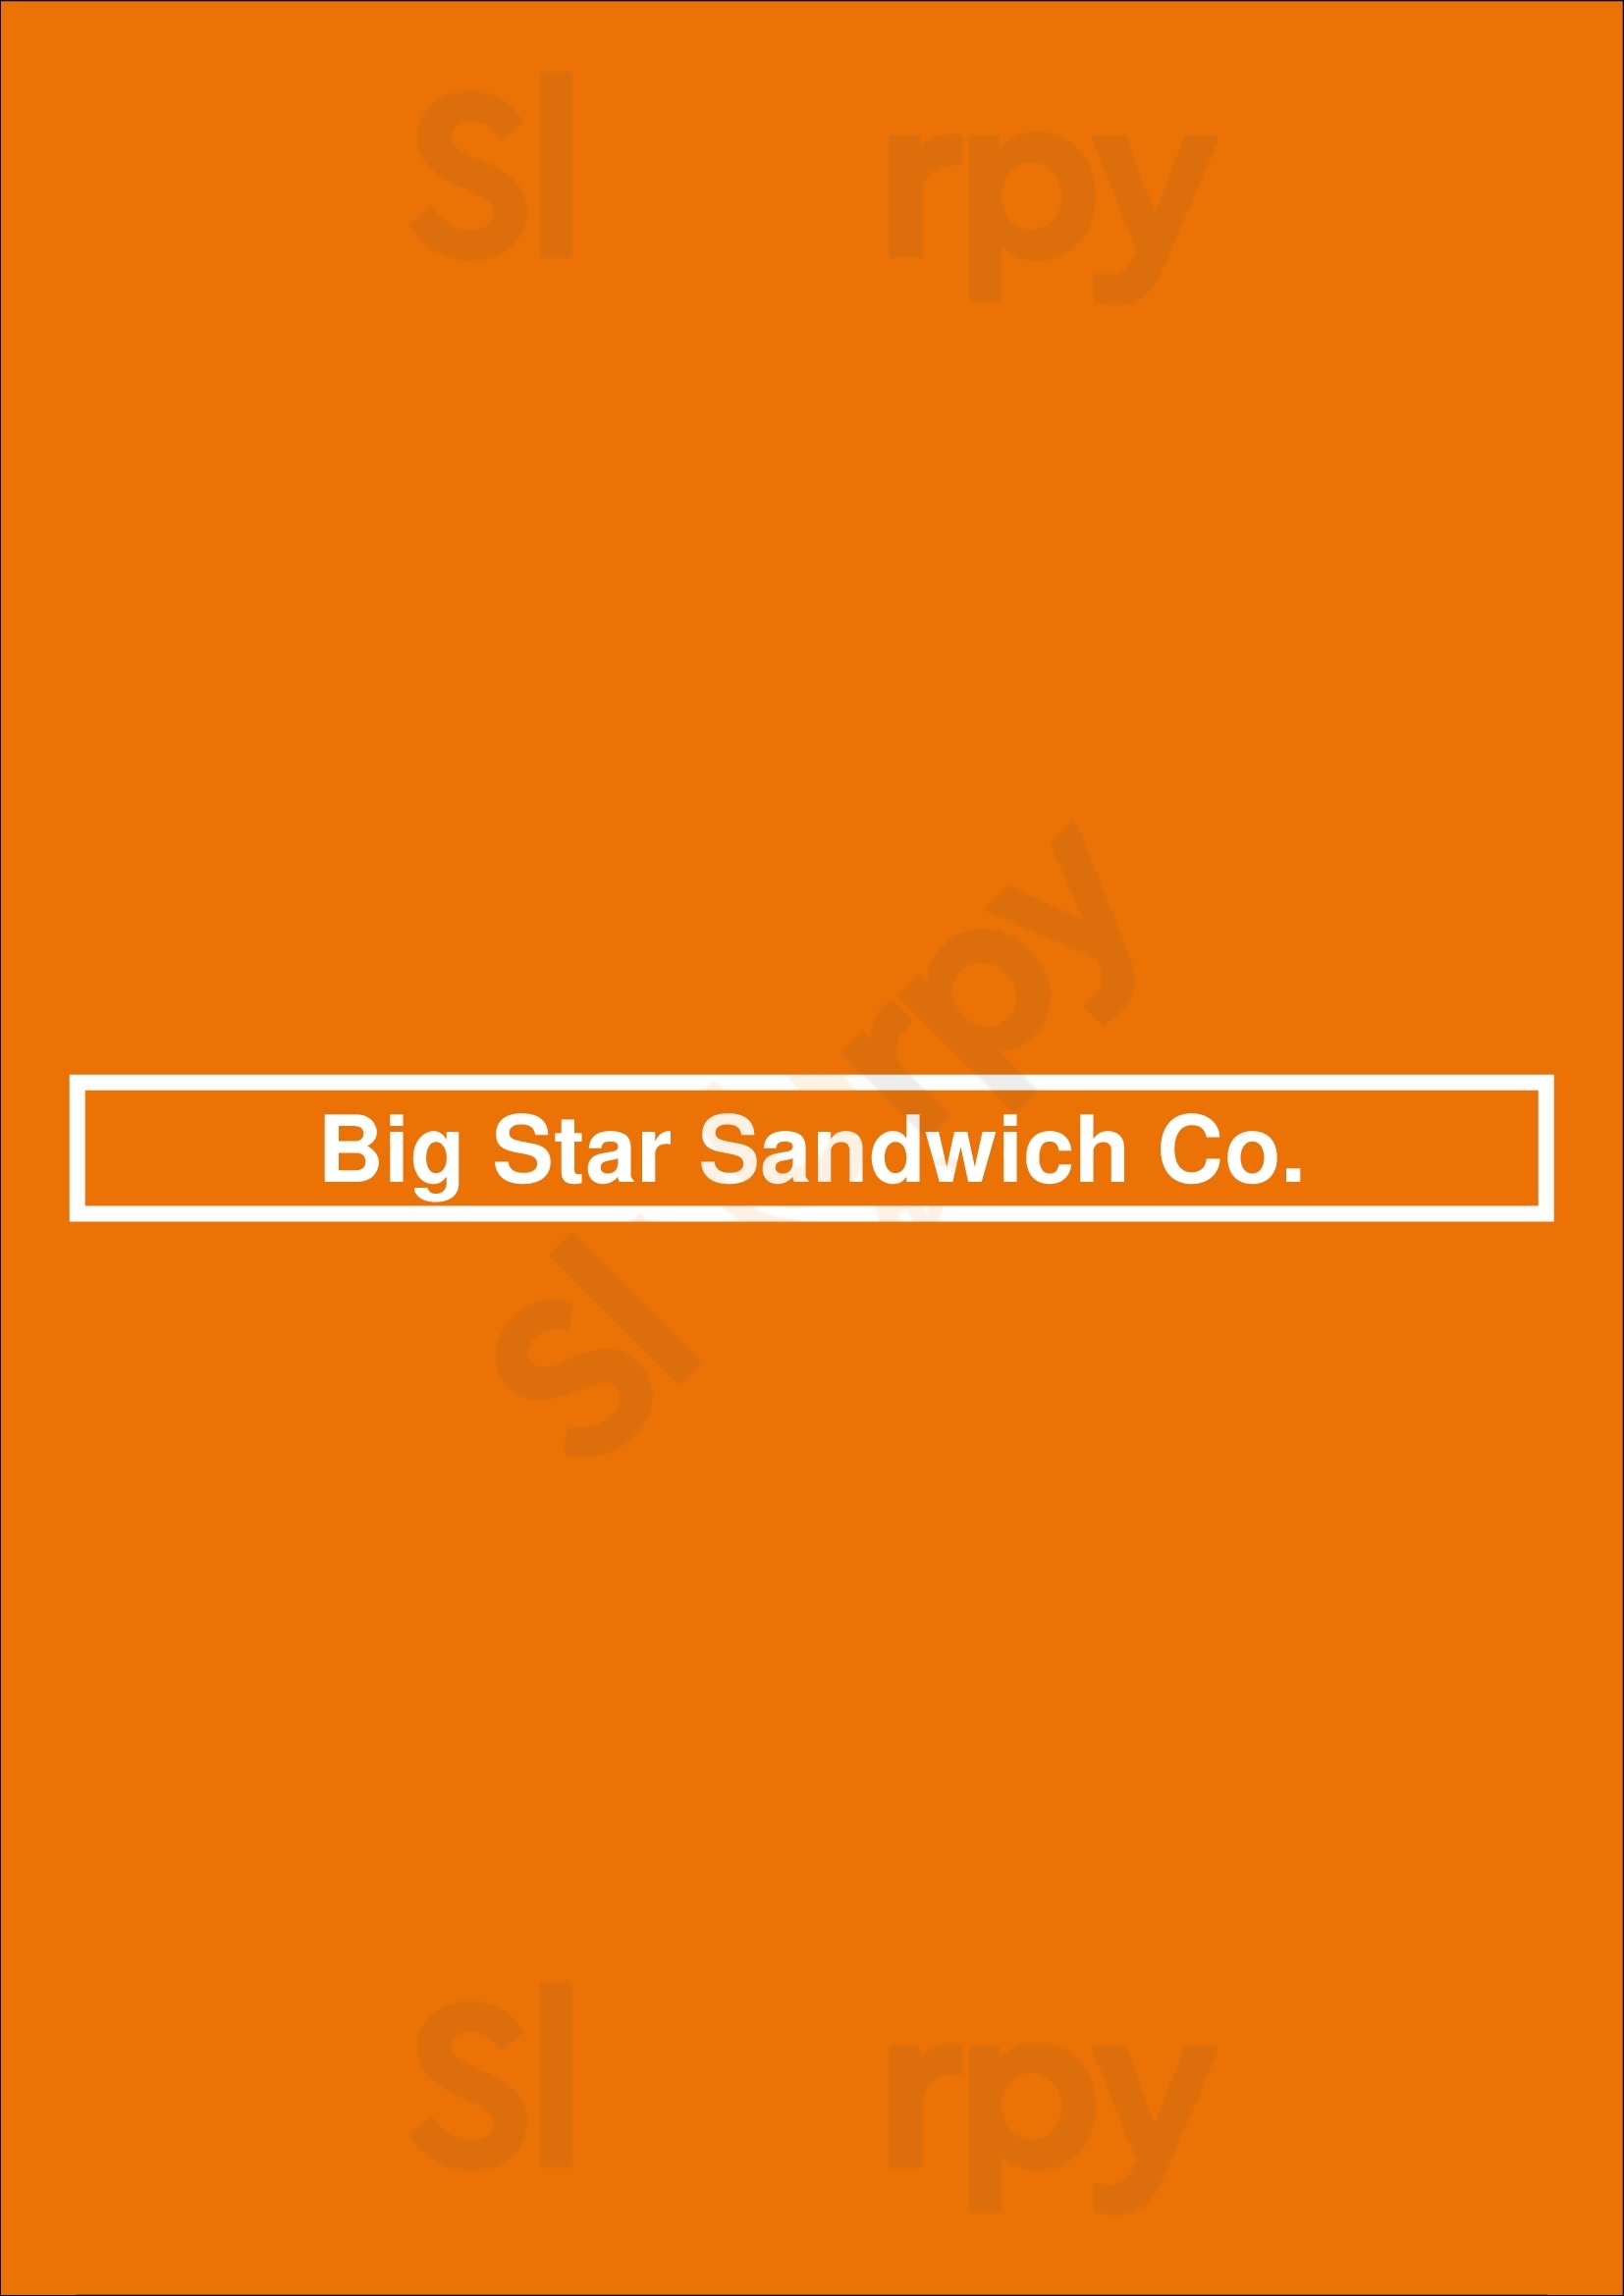 Big Star Sandwich Co. Burnaby Menu - 1